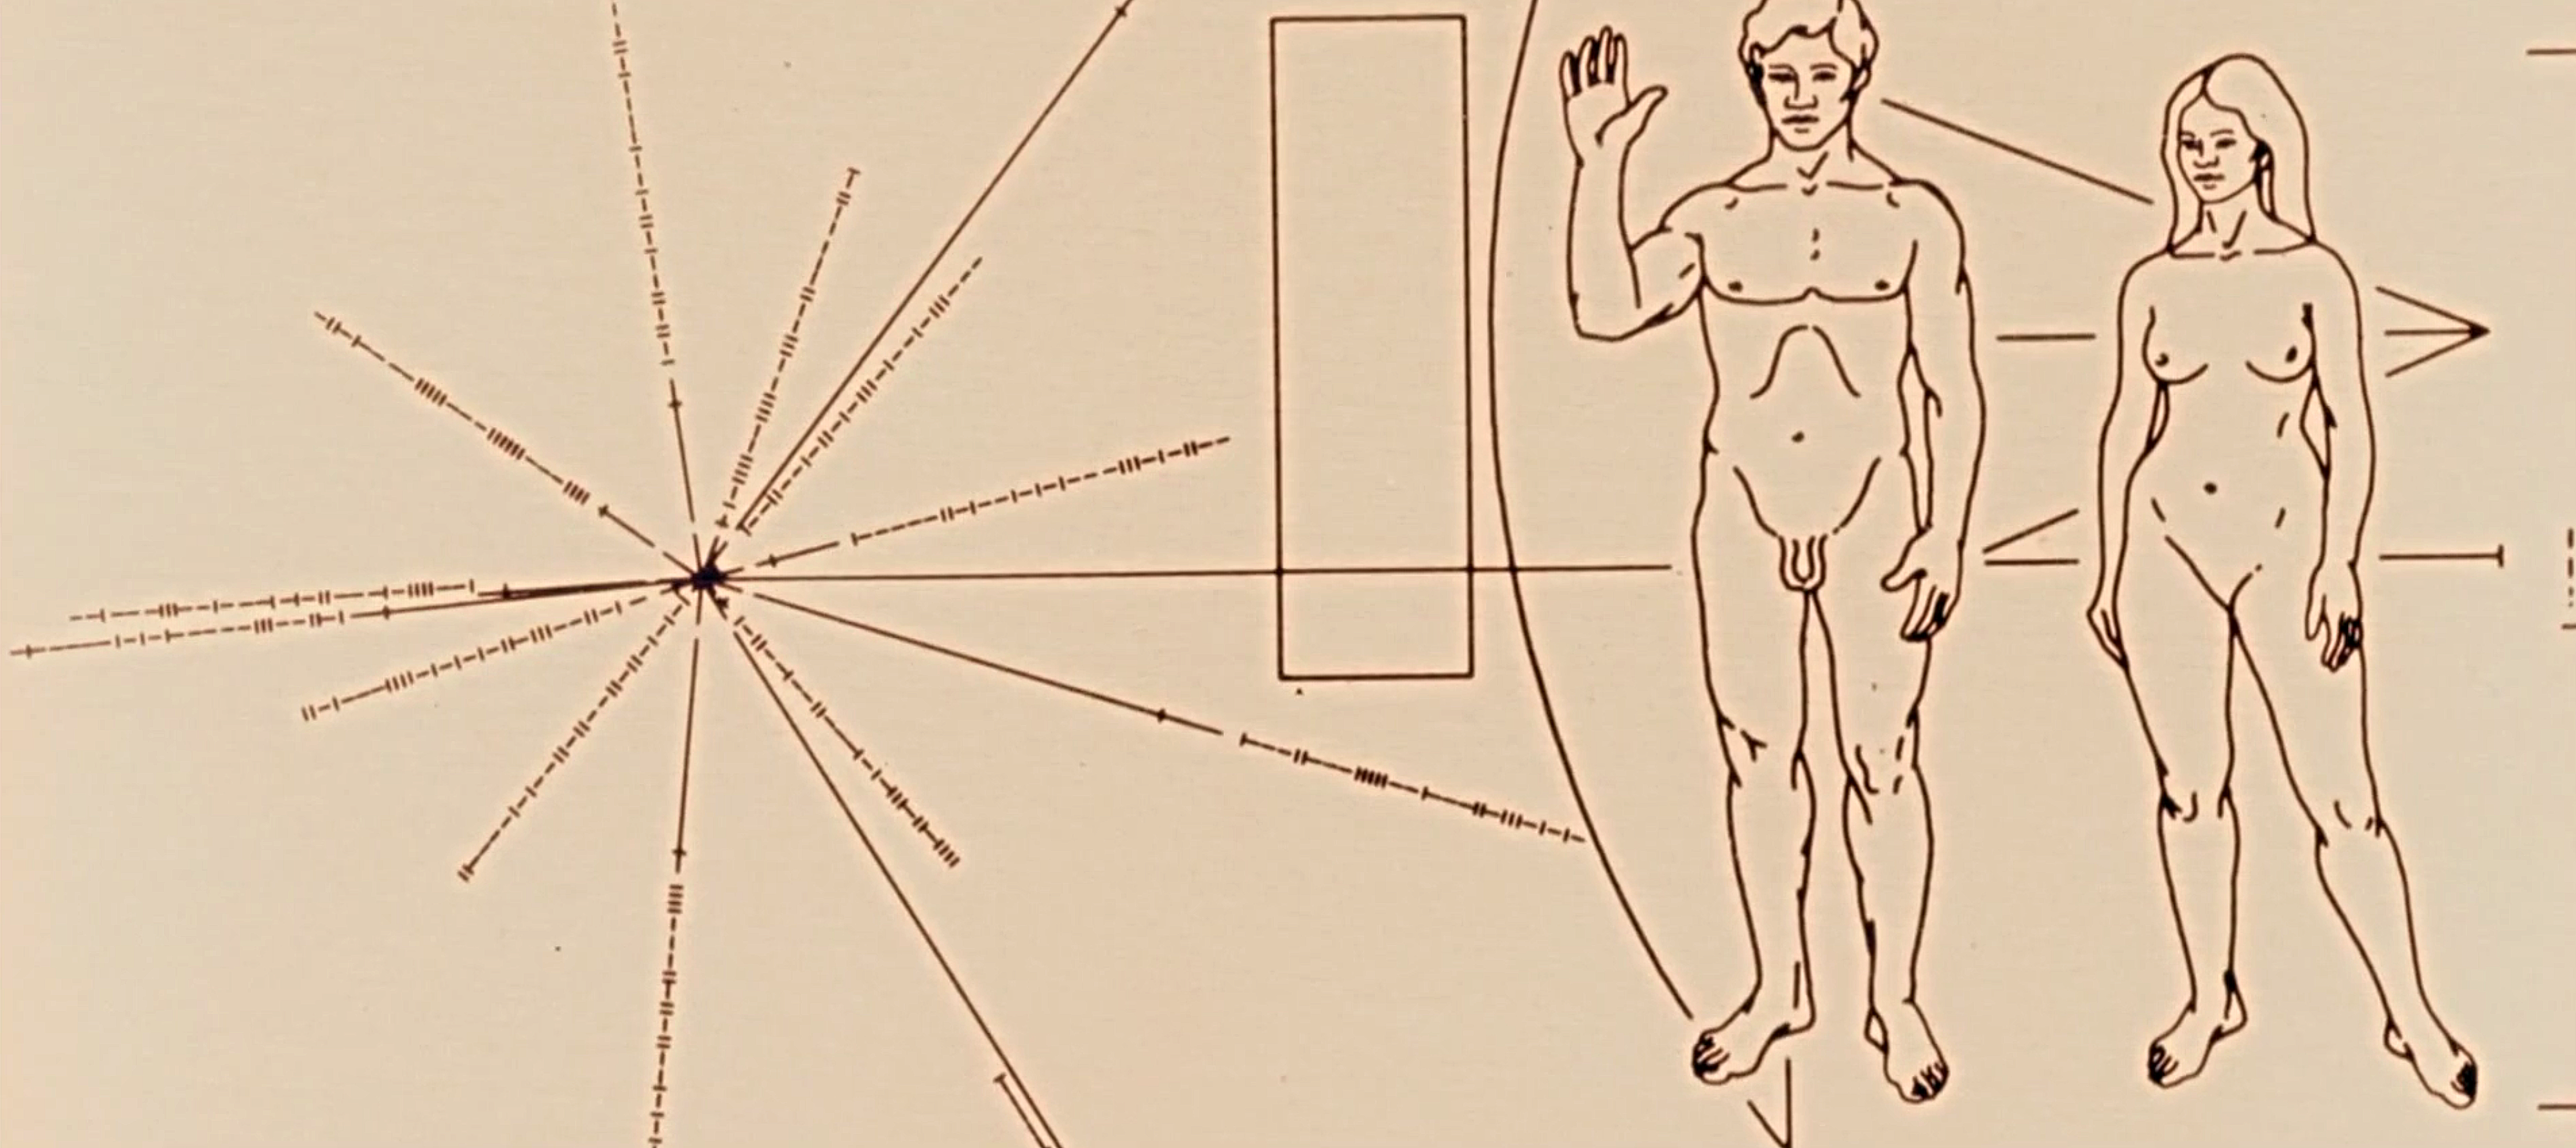 Le message pictural qui accompagne la sonde Pioneer en 1972 [UpSide Television]